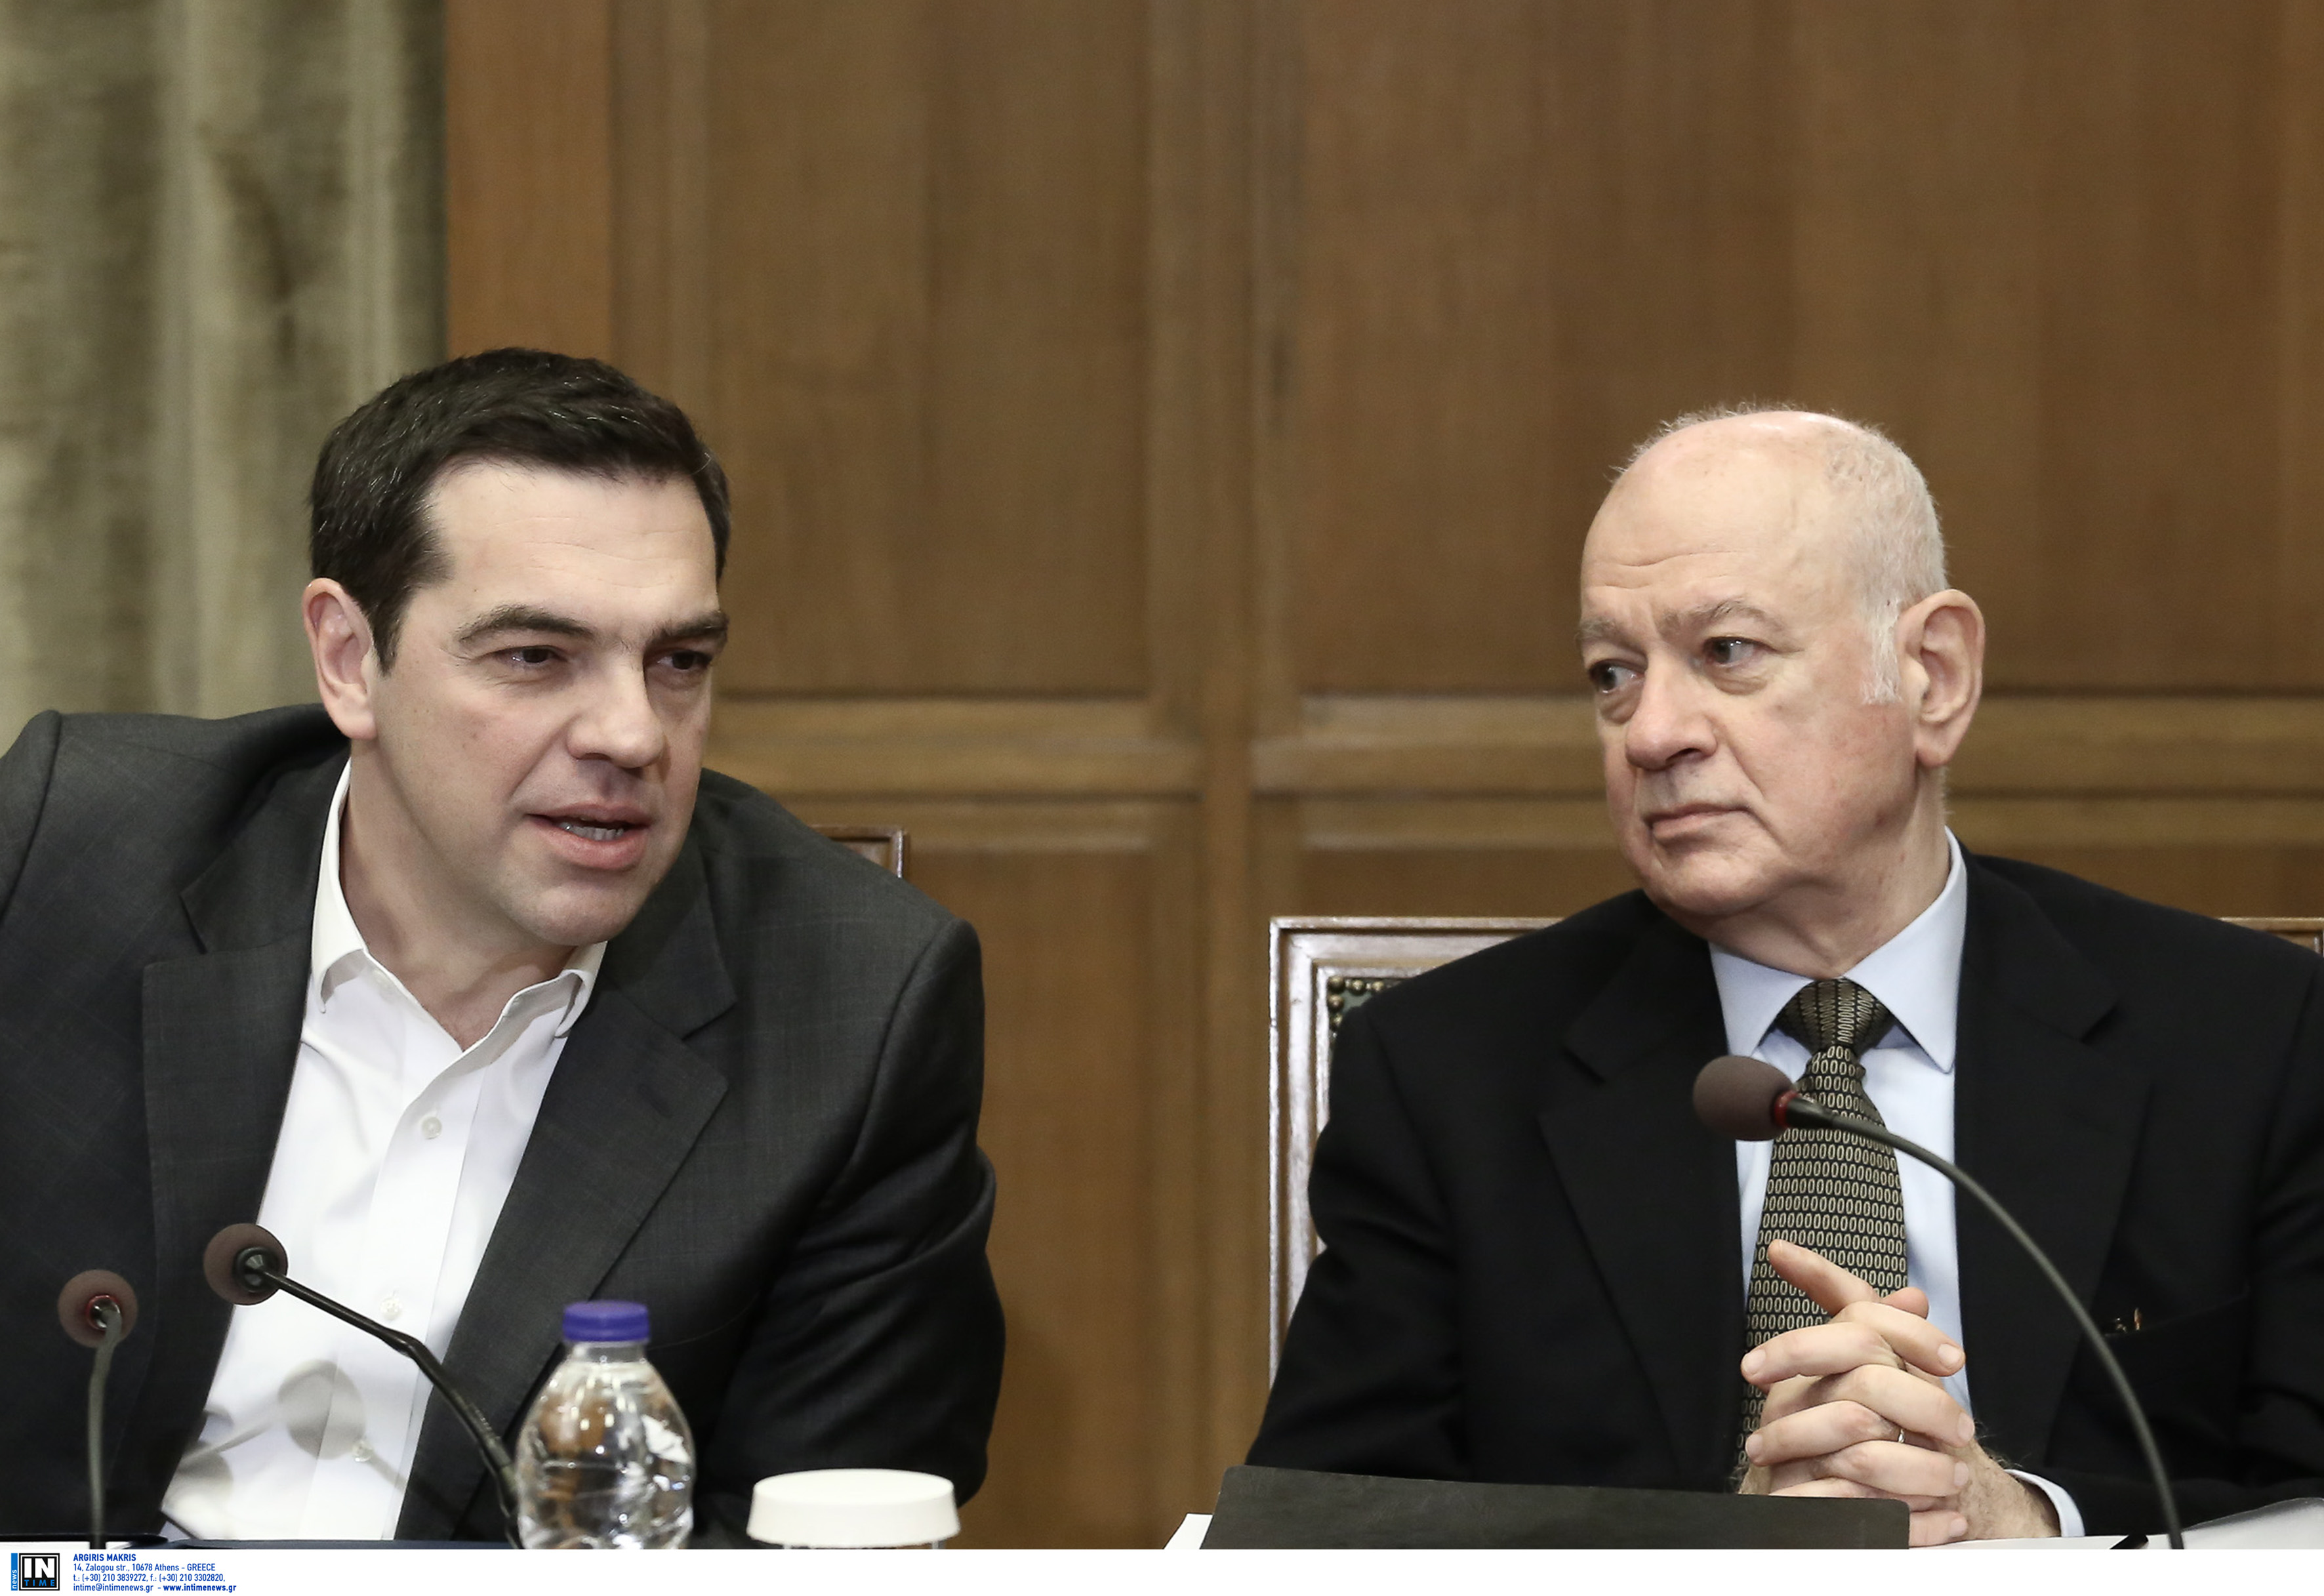 An SMS resignation: What Papadimitriou wrote Tsipras